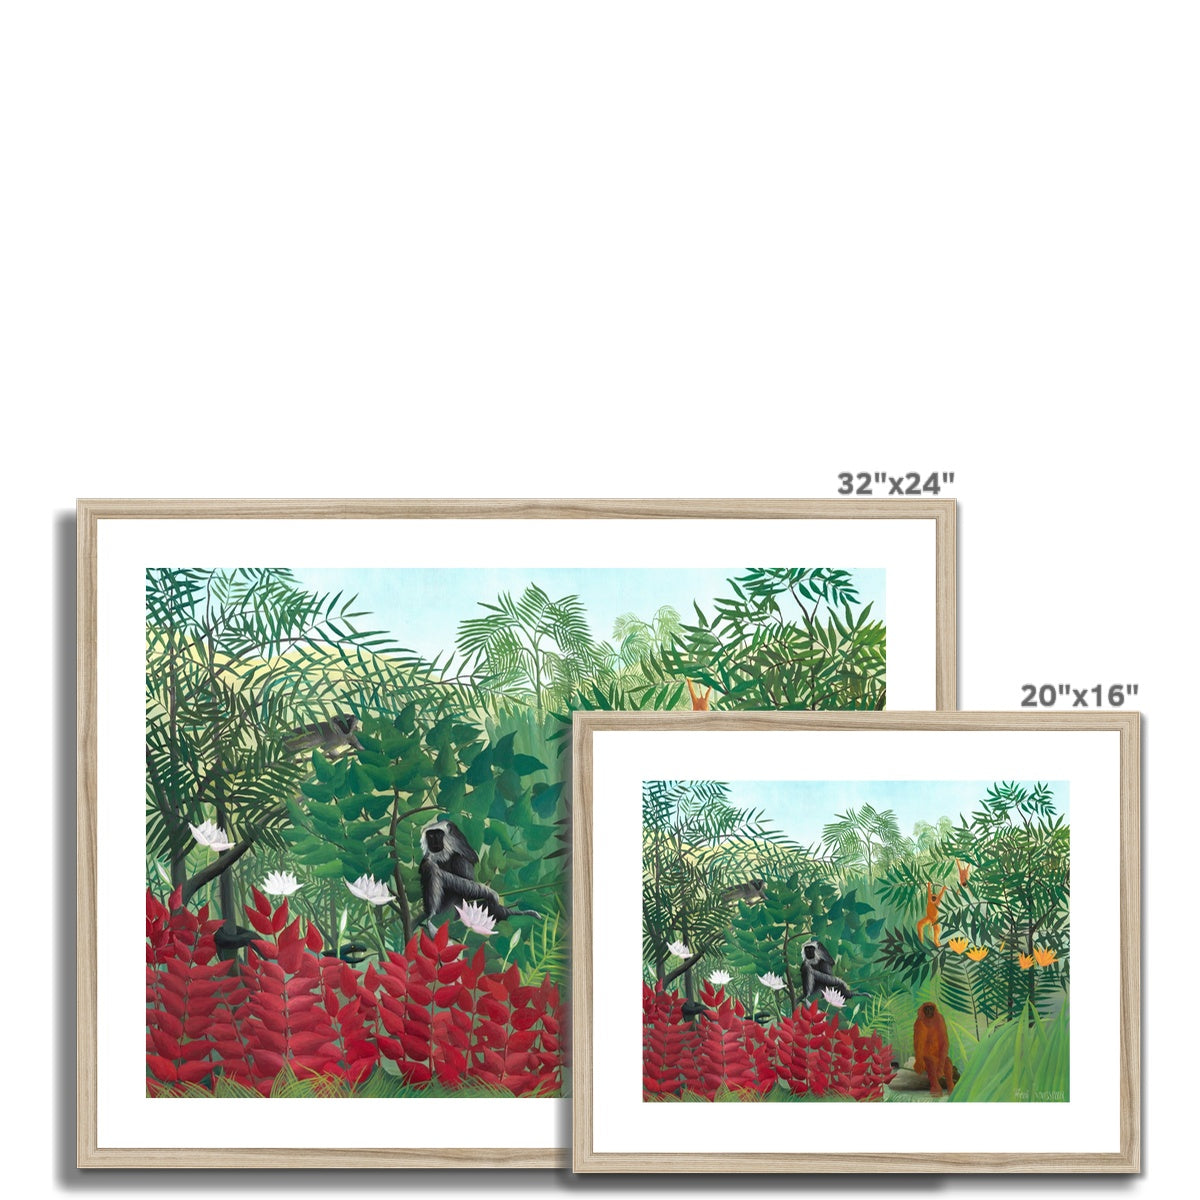 Henri Rousseau Framed Open Edition Art Print. &#39;Tropical Forest with Monkeys&#39;. Art Gallery Historic Art